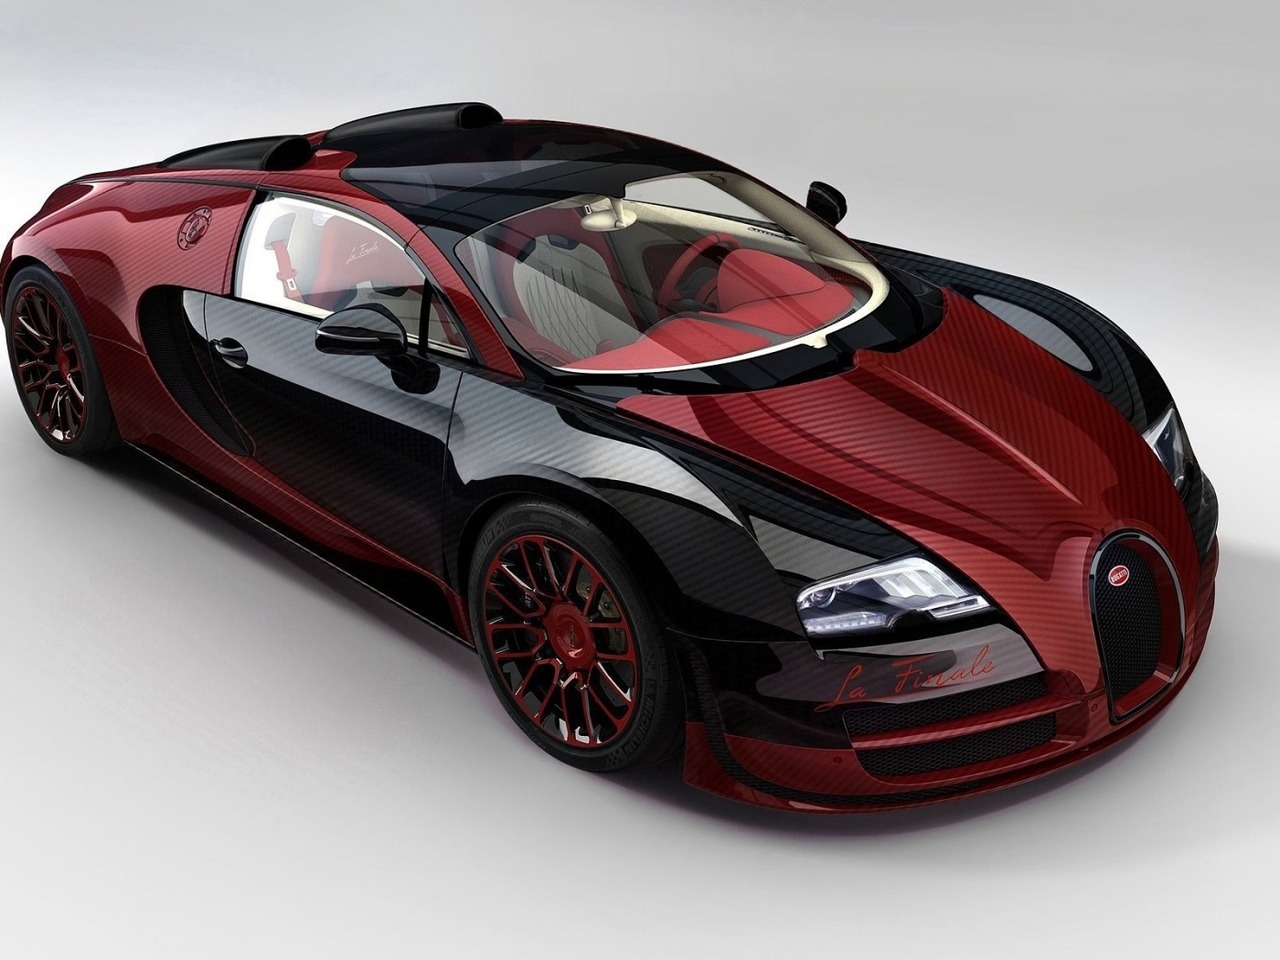 Bugatti Veyron Grand Sport Vitesse for 1280 x 960 resolution